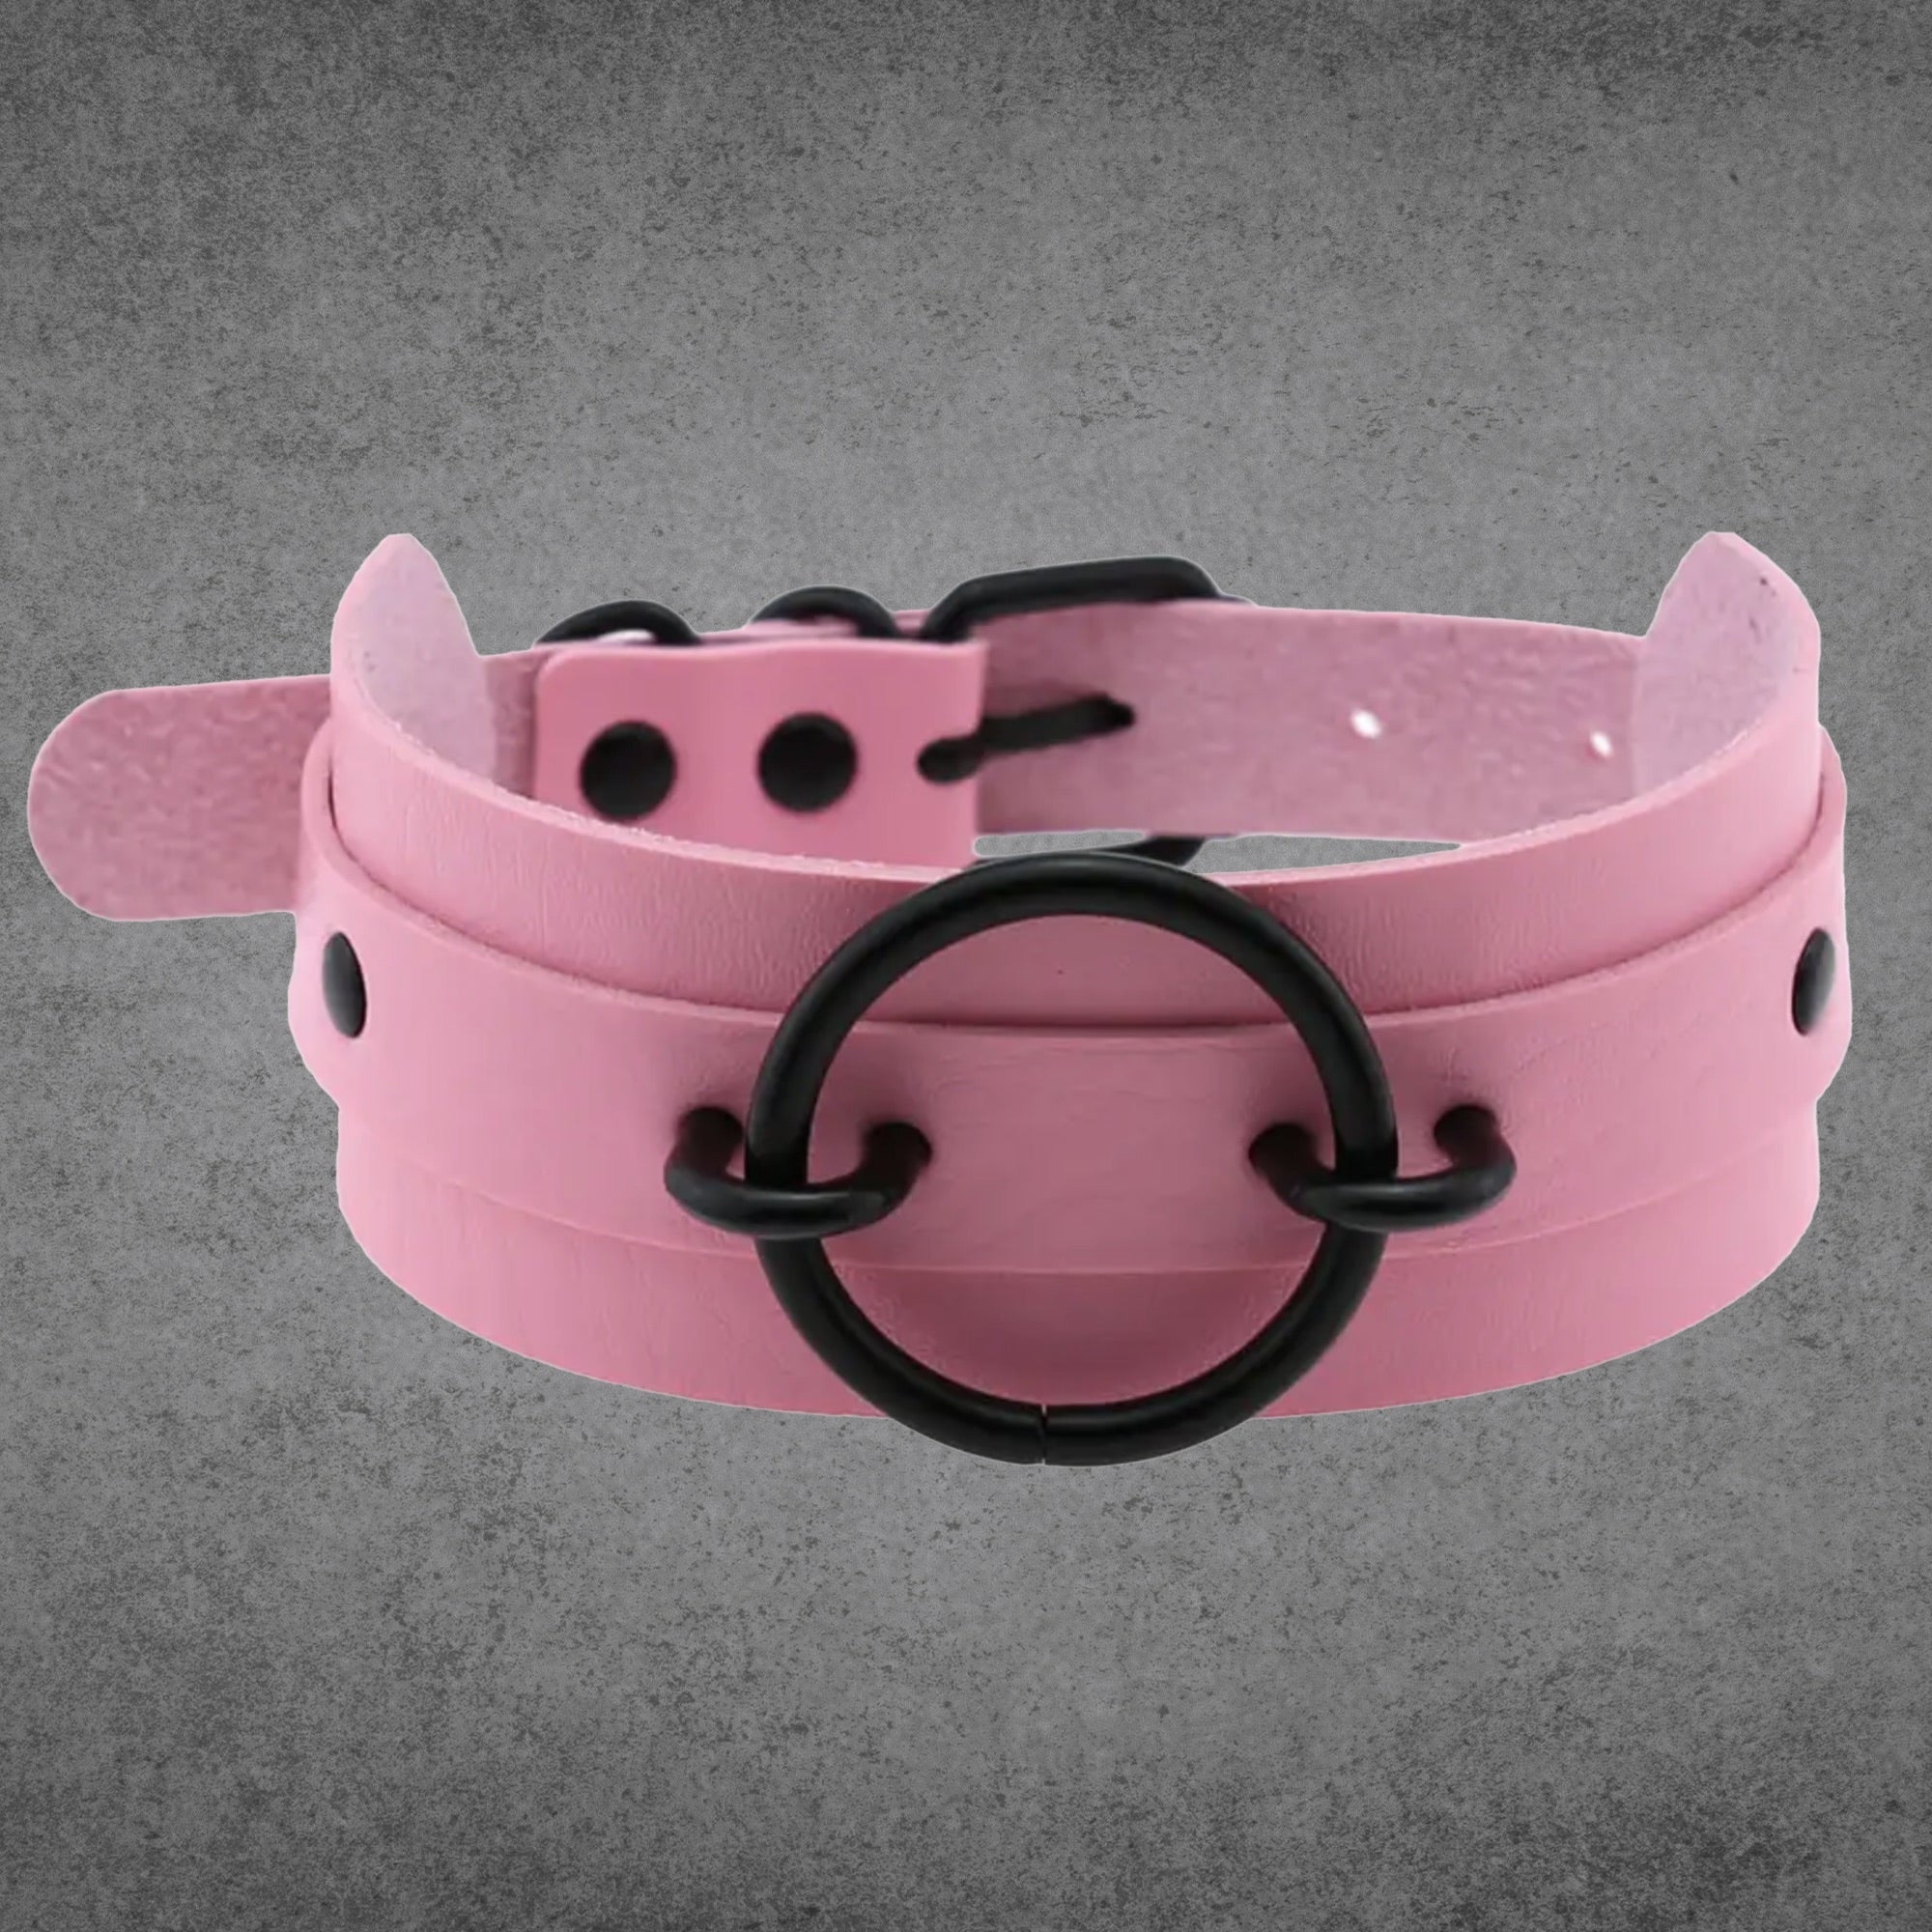 Fixed O Ring Choker Collar - Baby Pink & Black